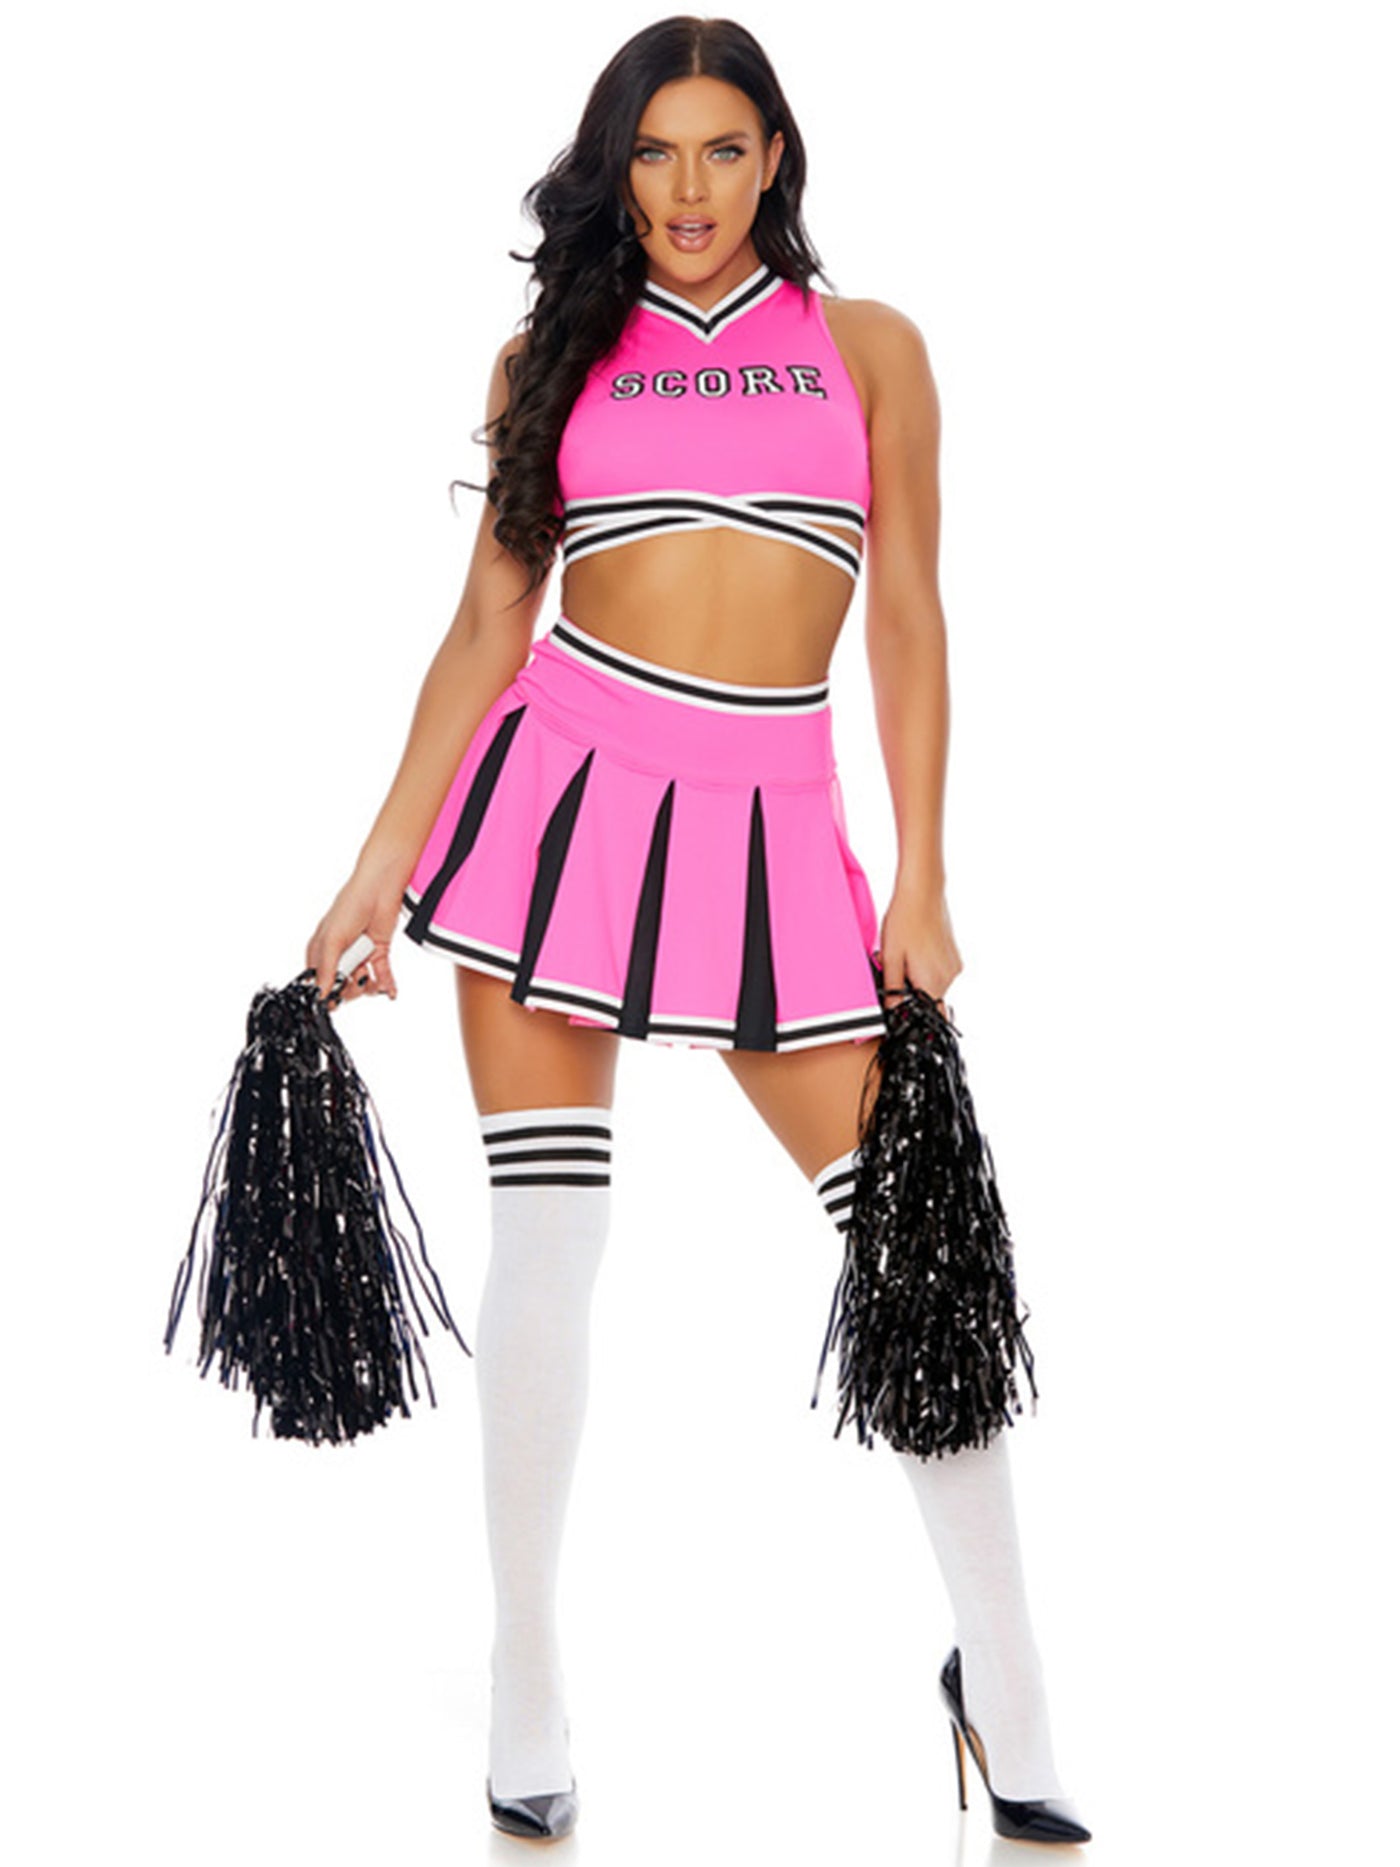 Score! 4 Piece Sexy Pink Cheerleading Costume